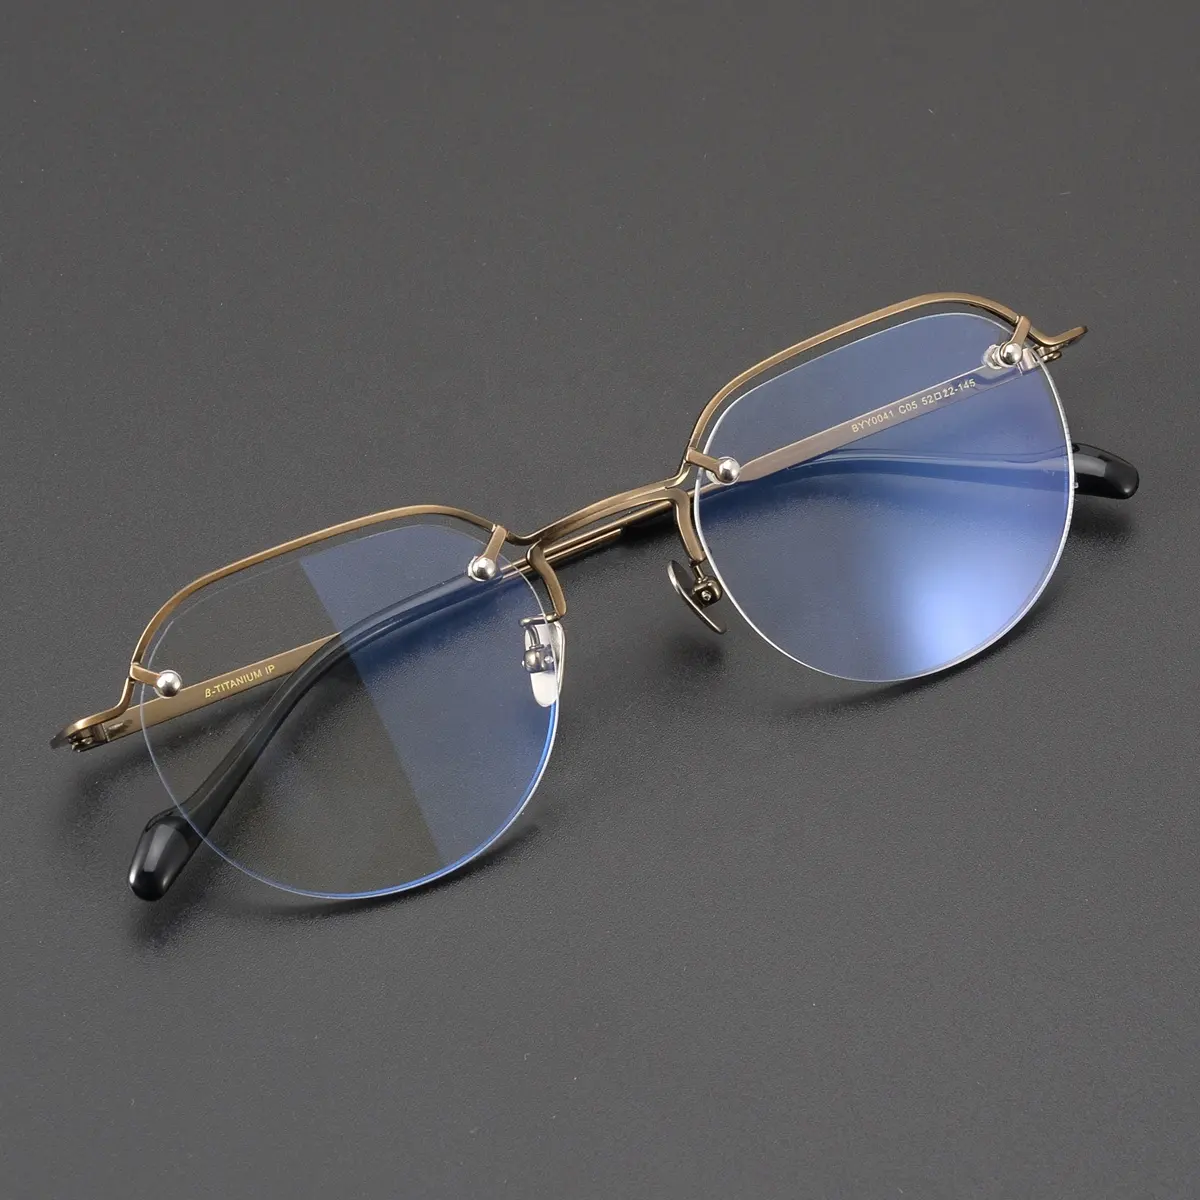 Stok pabrik kacamata titanium 50 pasang barang grosir campuran gratis pengiriman gratis logo kustom bingkai kacamata tanpa bingkai pria